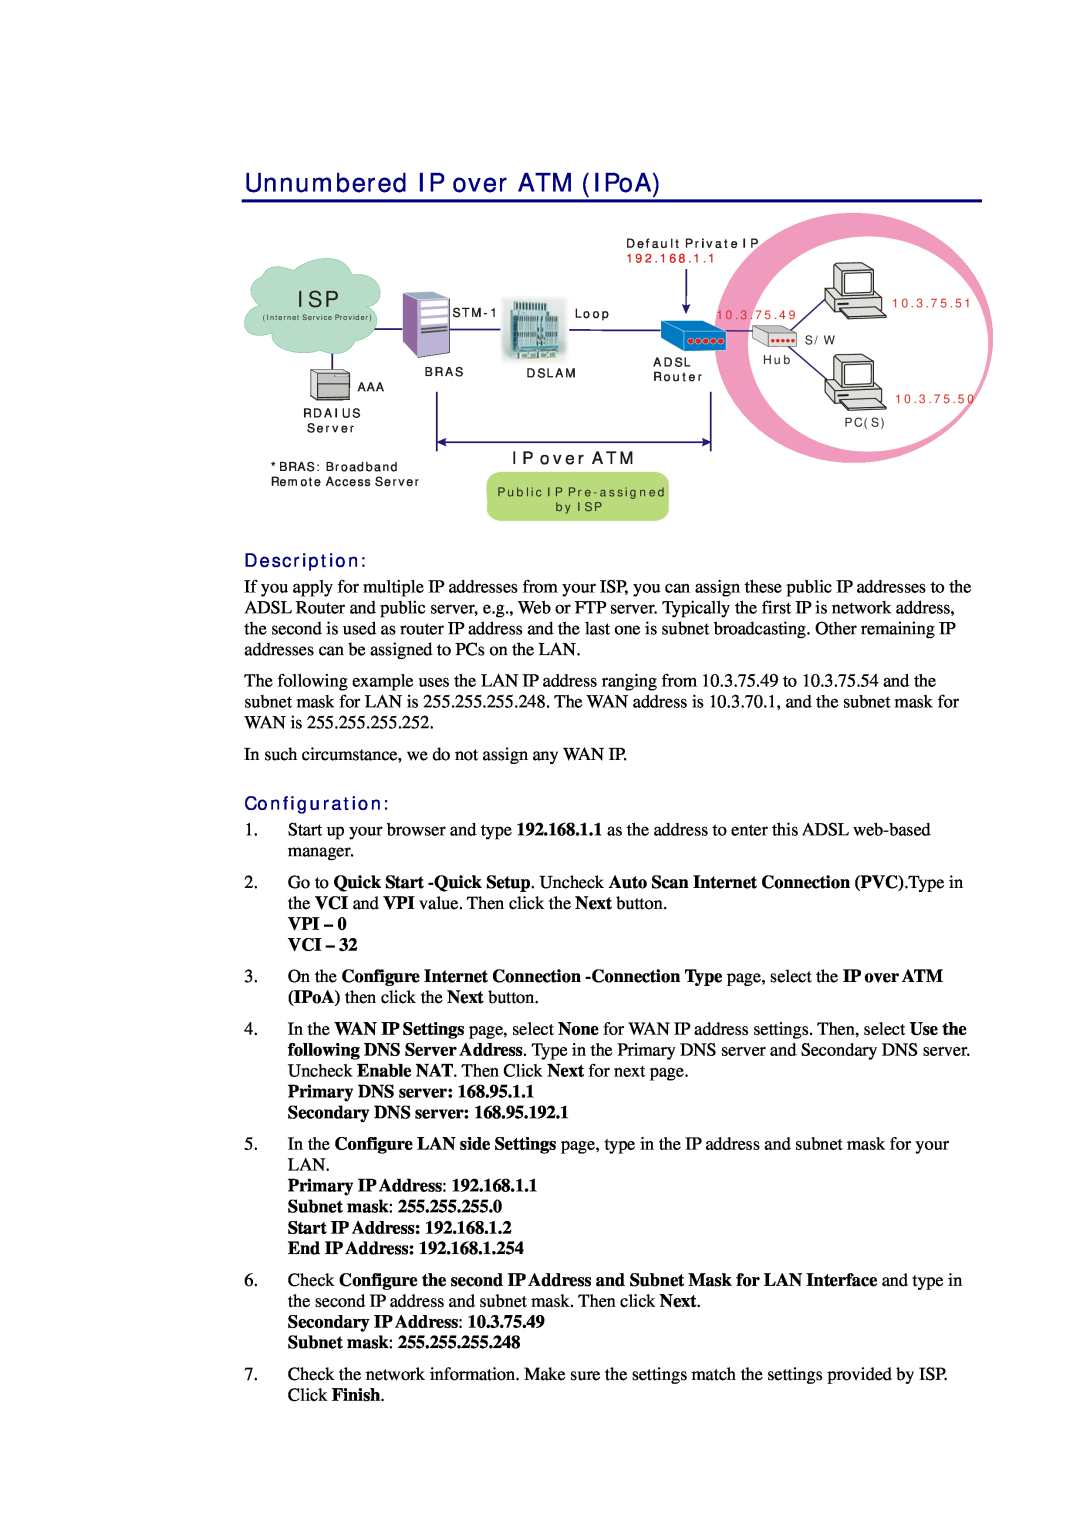 Siemens CL-010-I Unnumbered IP over ATM IPoA, Description, Configuration, VPI - 0 VCI, Secondary IP Address Subnet mask 